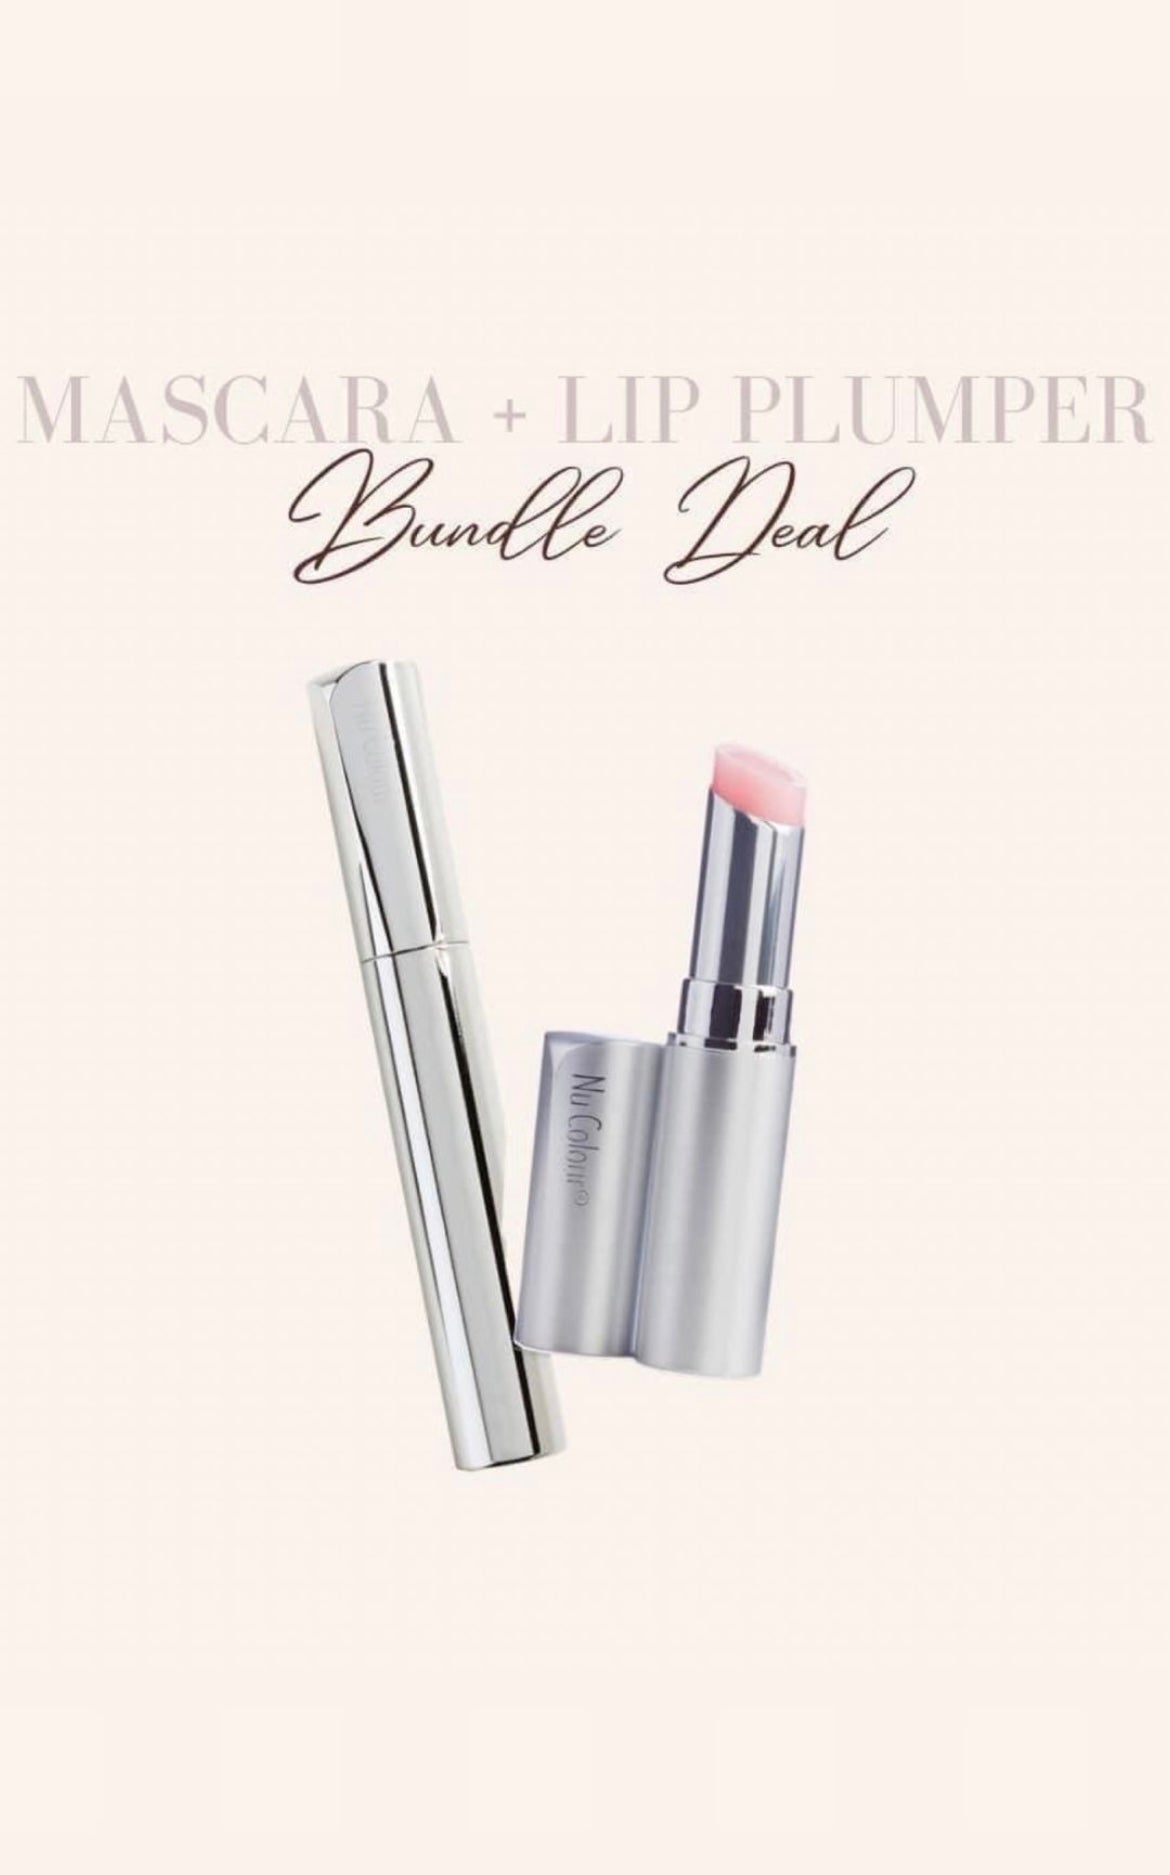 Mascara + Lip Plumping Balm